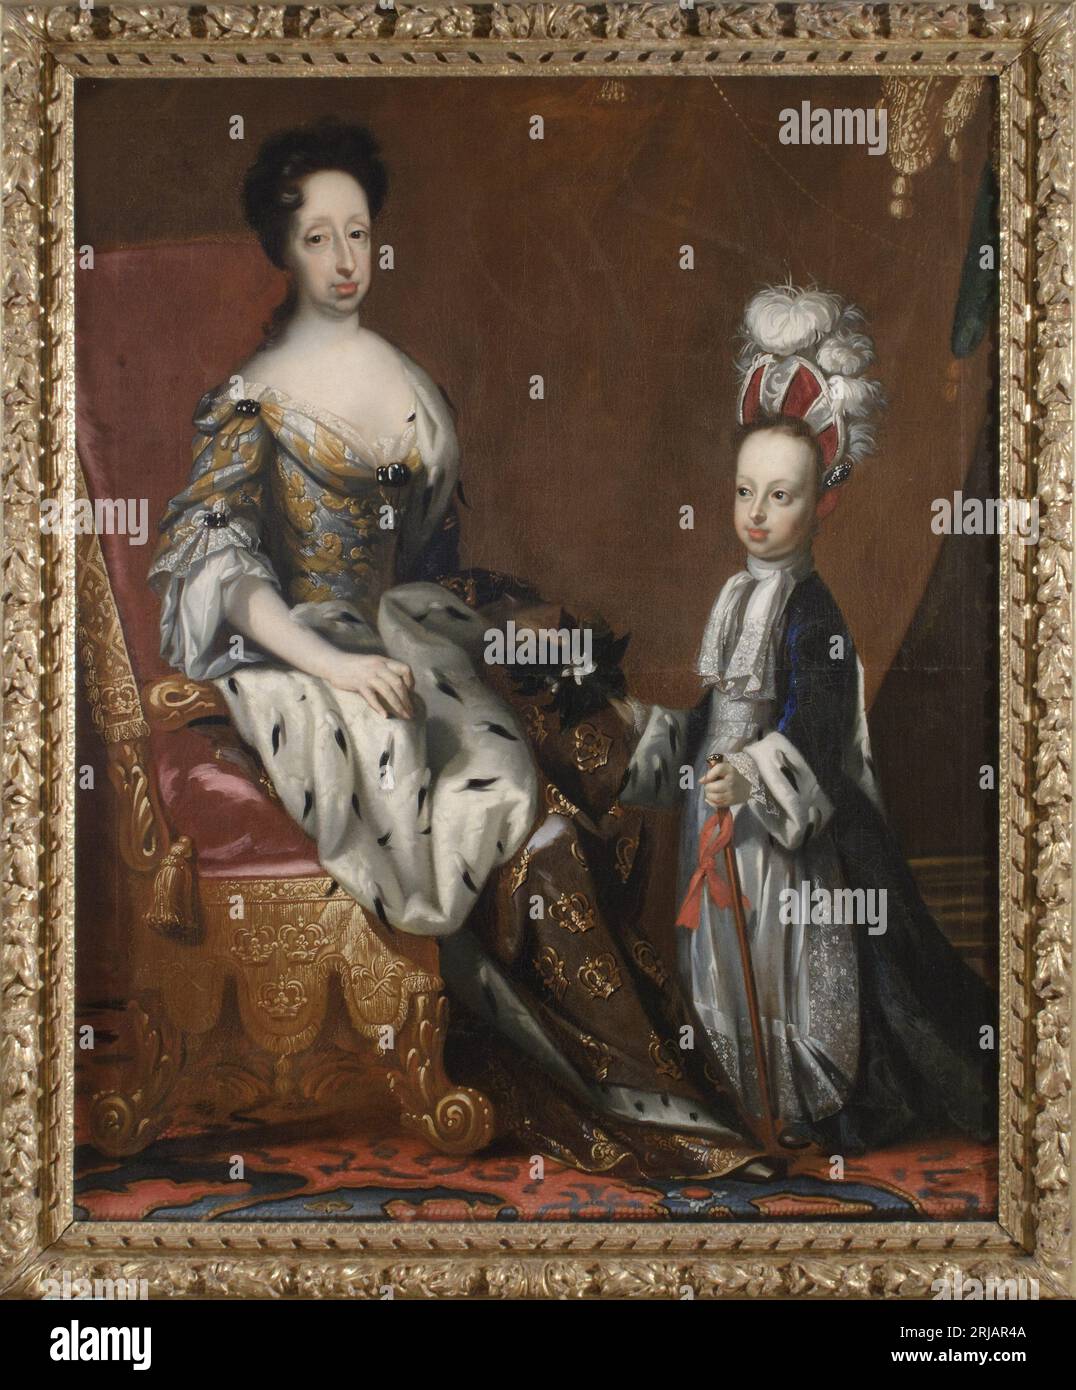 Hedvig Eleonora, 1636-1715, drottning av Sverige och Karl Fredrik, 1700-1739, hertig av Holstein 1704 by David von Krafft Stock Photo